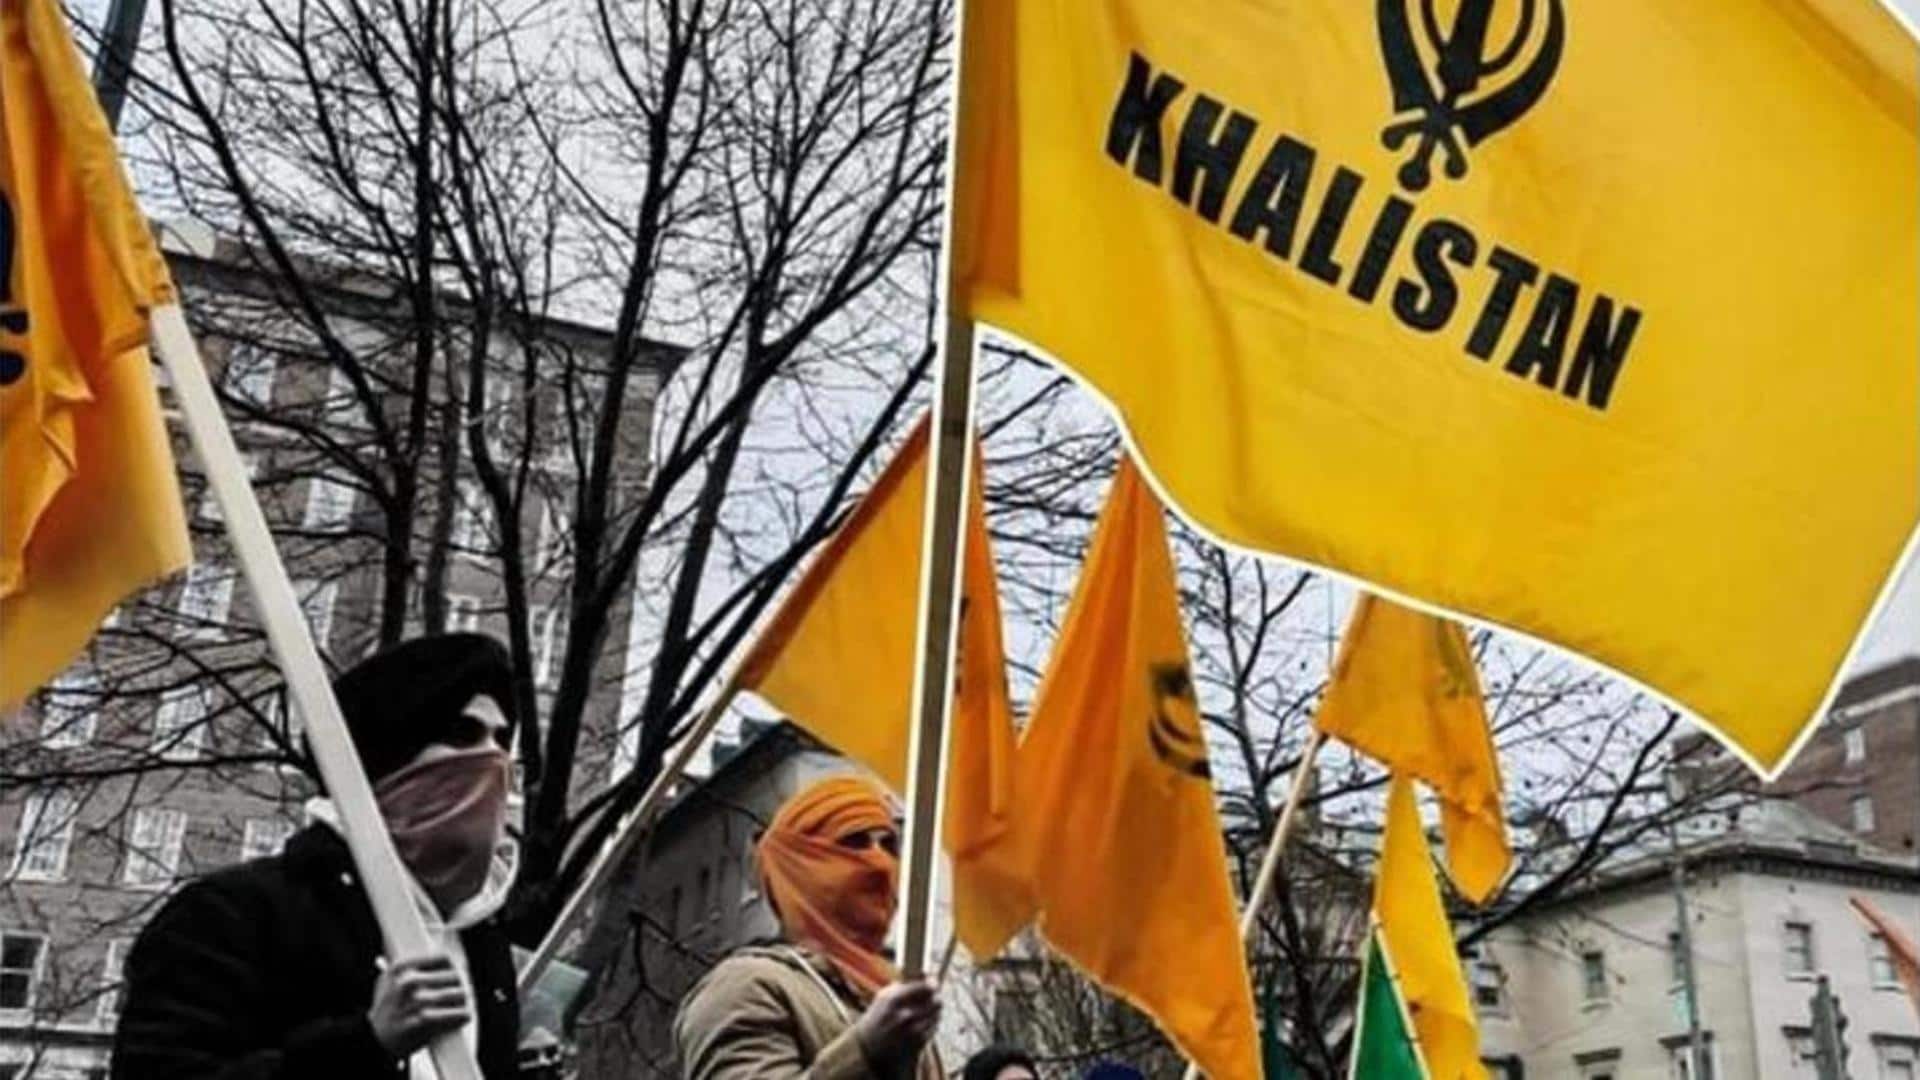 Complaint filed seeking revocation of Washington pro-Khalistani protesters' passports